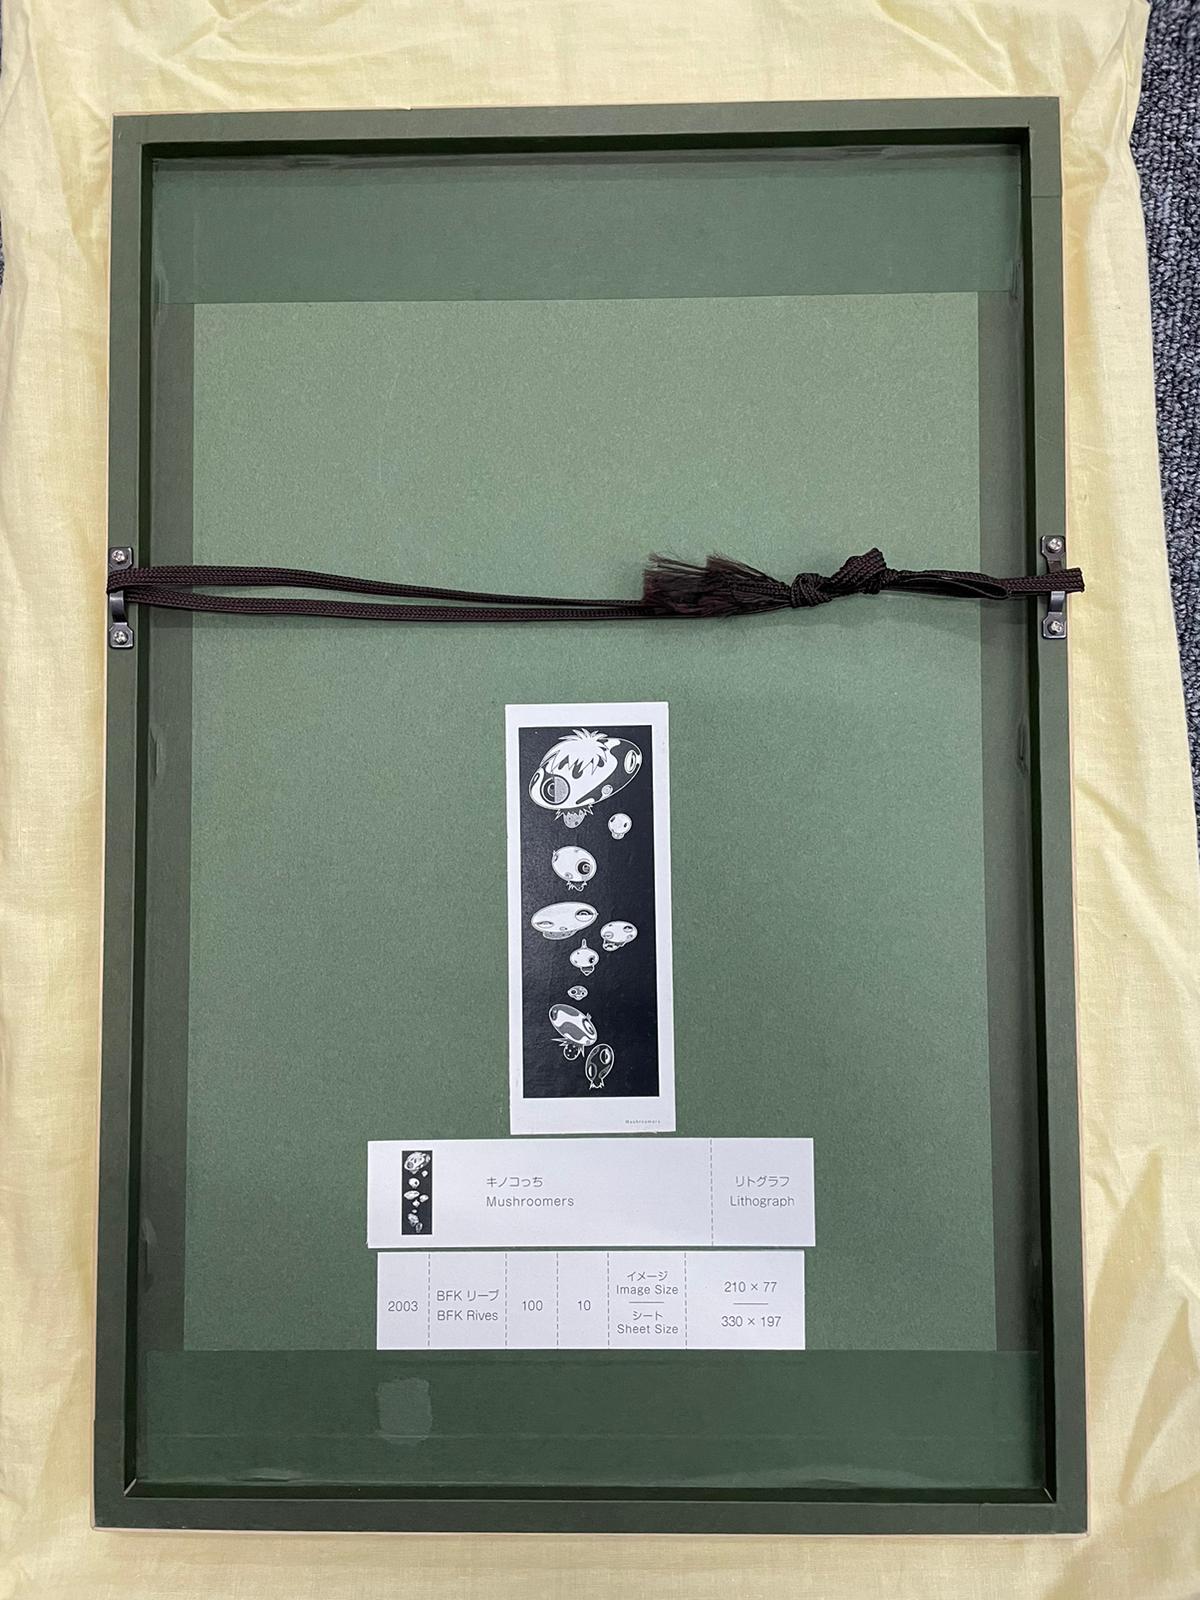 Mushroomers Limited Edition (print) by Murakami, signed and numbered - Pop Art Print by Takashi Murakami